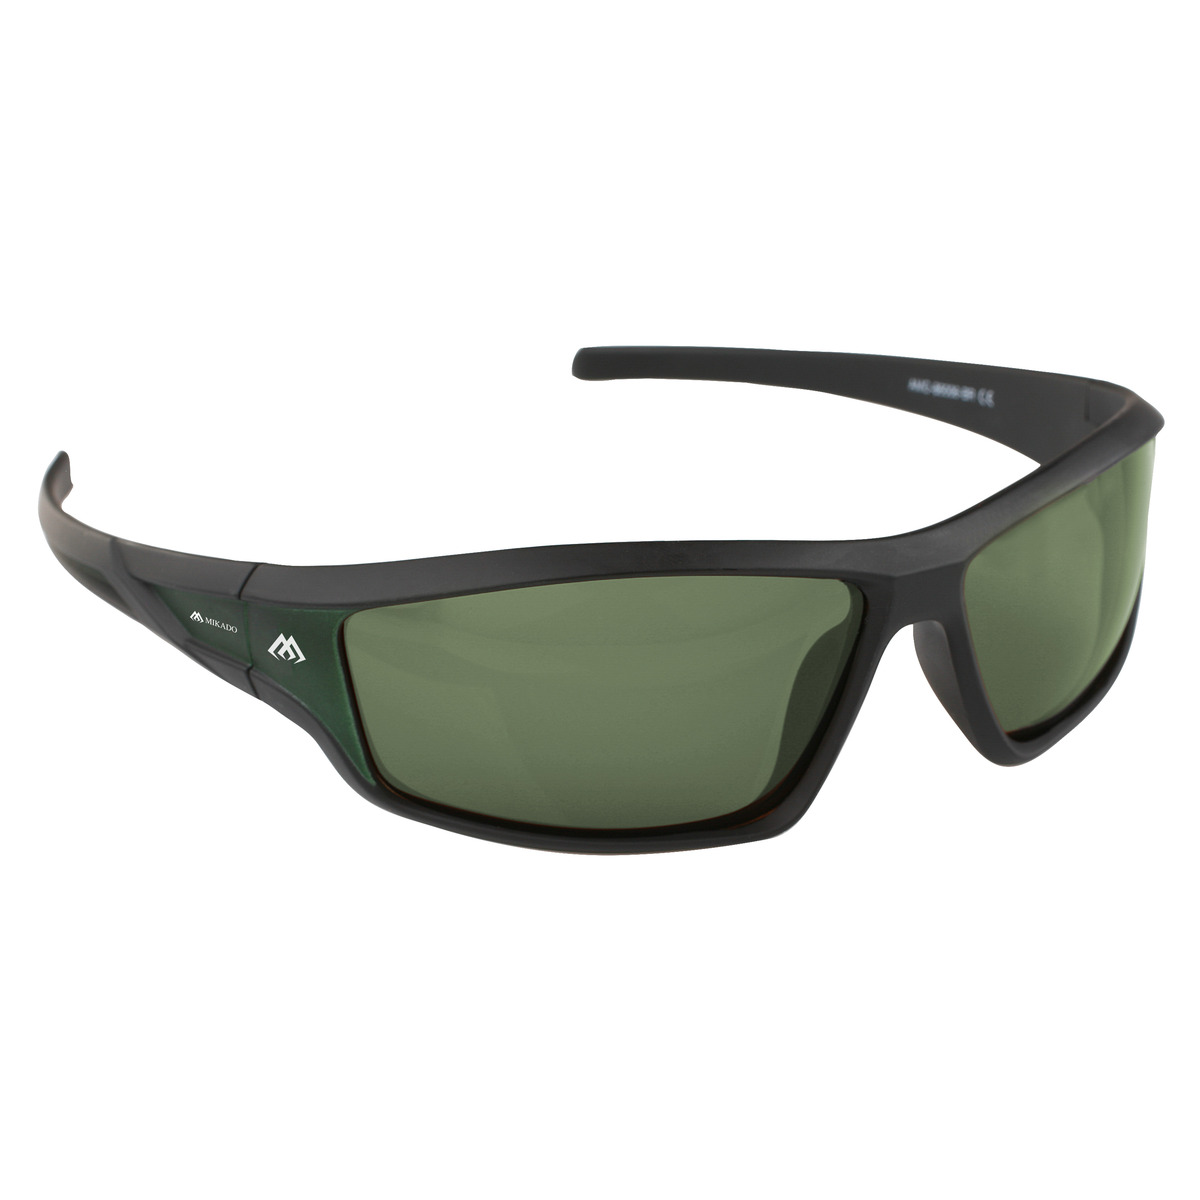 Mikado Sunglasses Polarized - 86006 GREEN